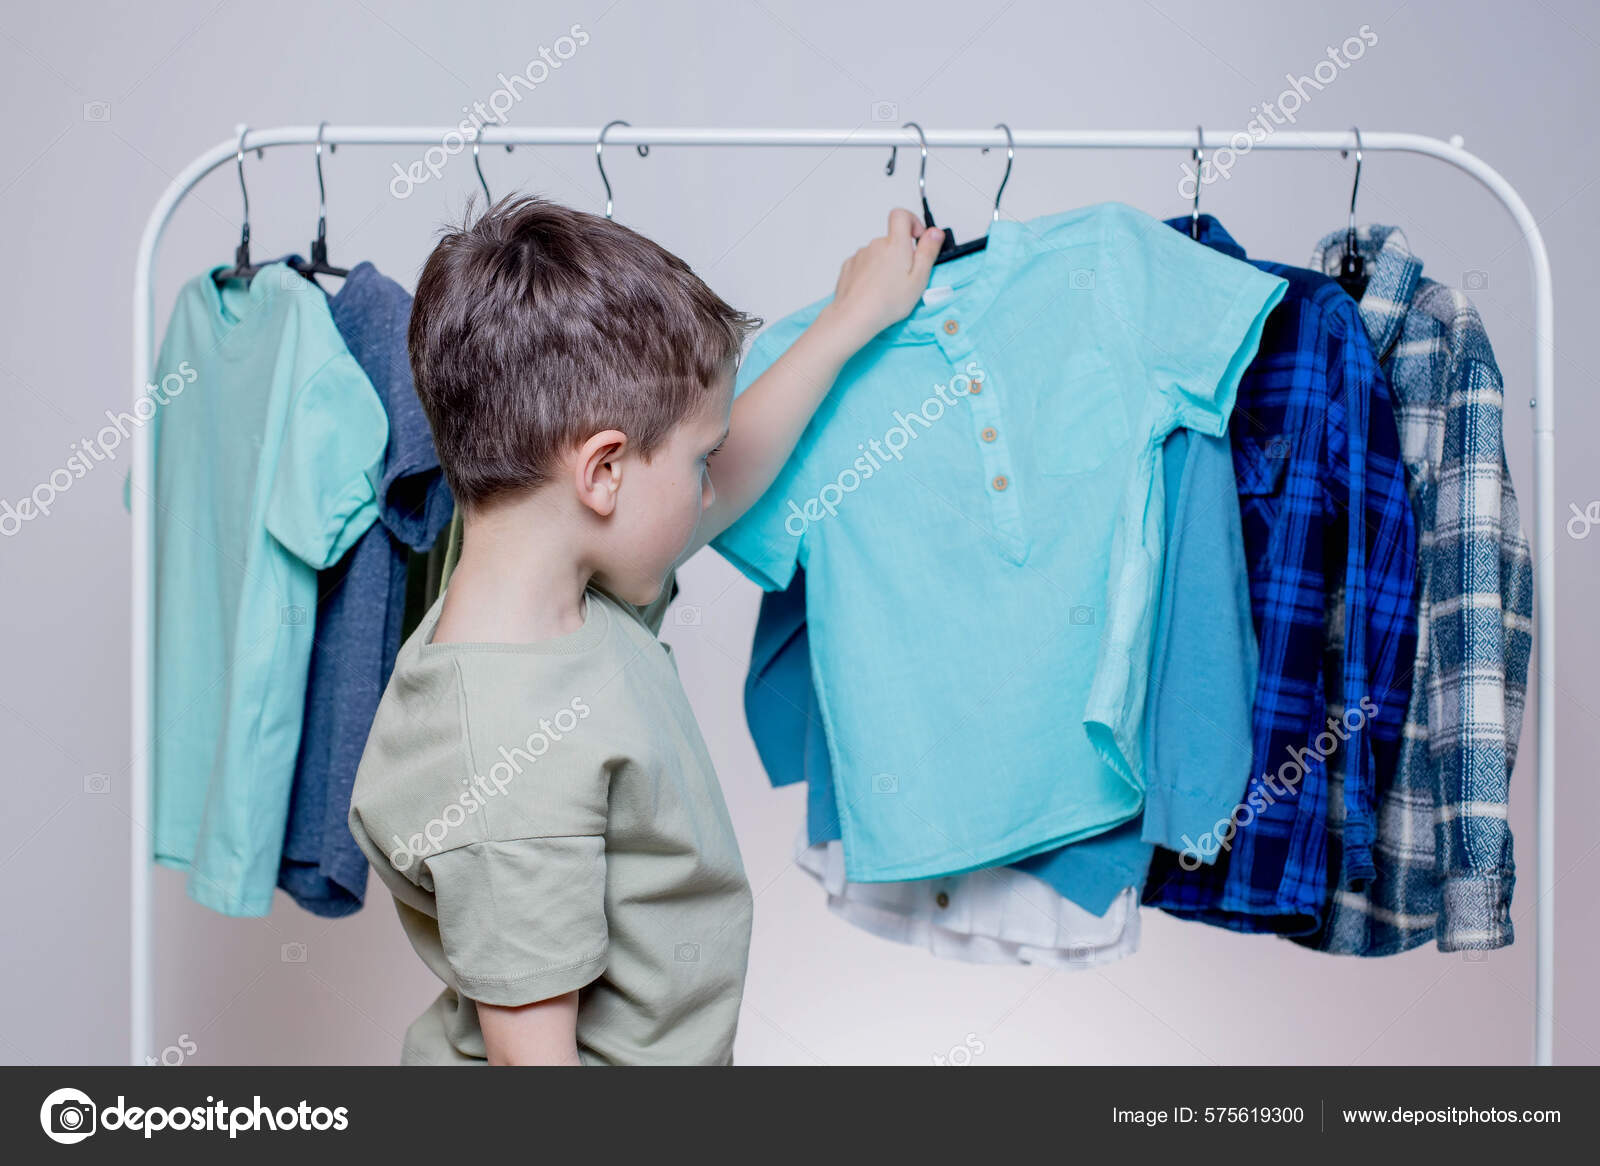 https://st.depositphotos.com/6844612/57561/i/1600/depositphotos_575619300-stock-photo-boy-preschooler-standing-hangers-racks.jpg